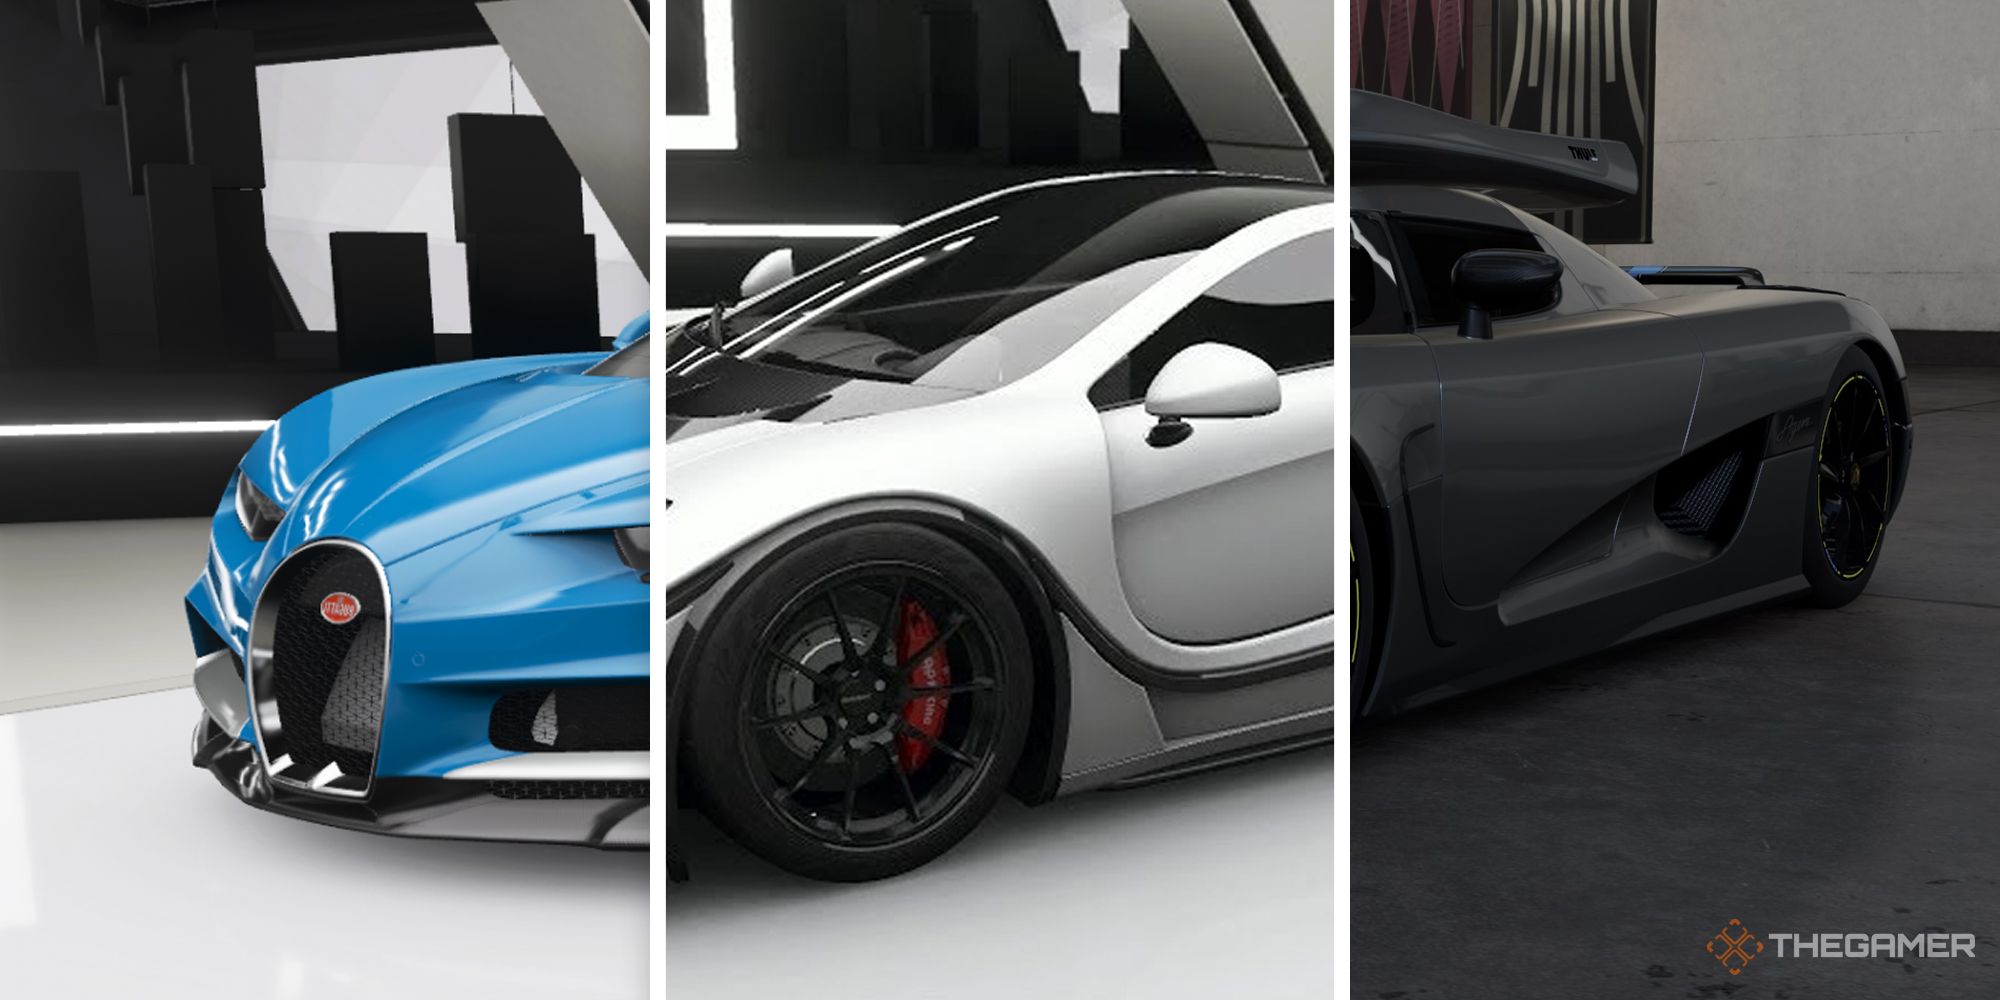 Hindre Stoop Lære udenad Forza Horizon 4: Fastest Cars